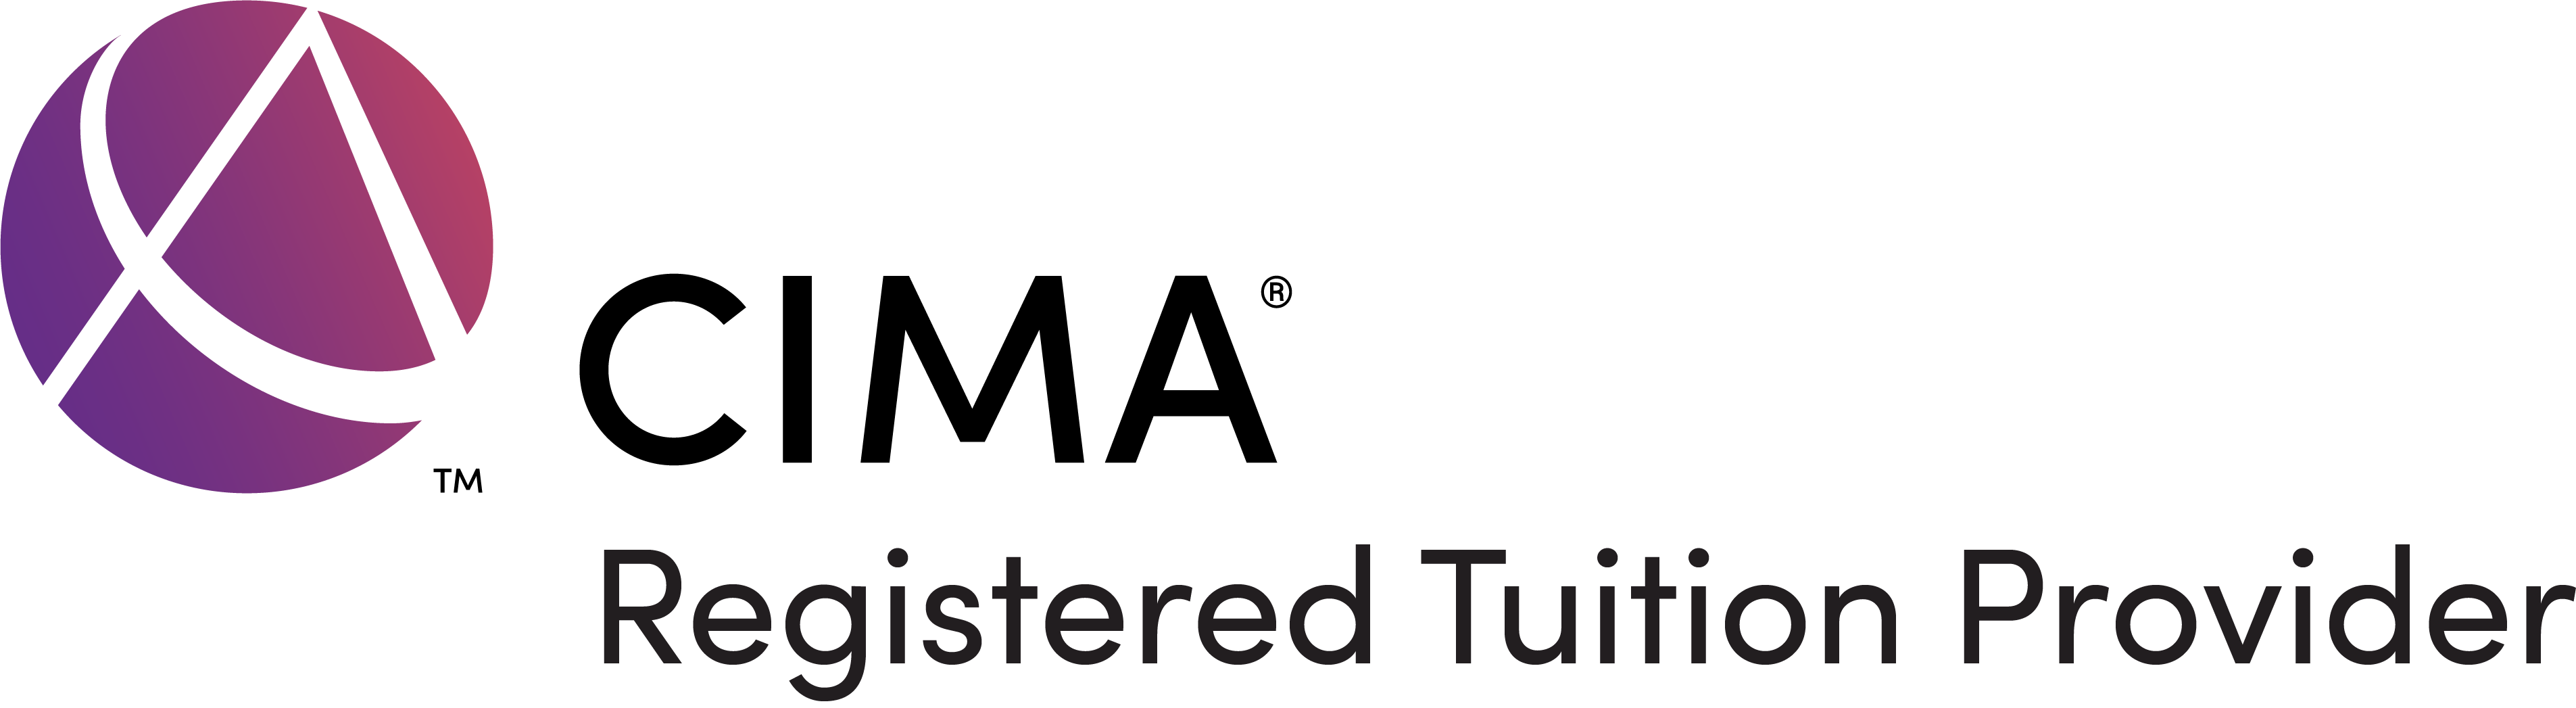 qualification logo